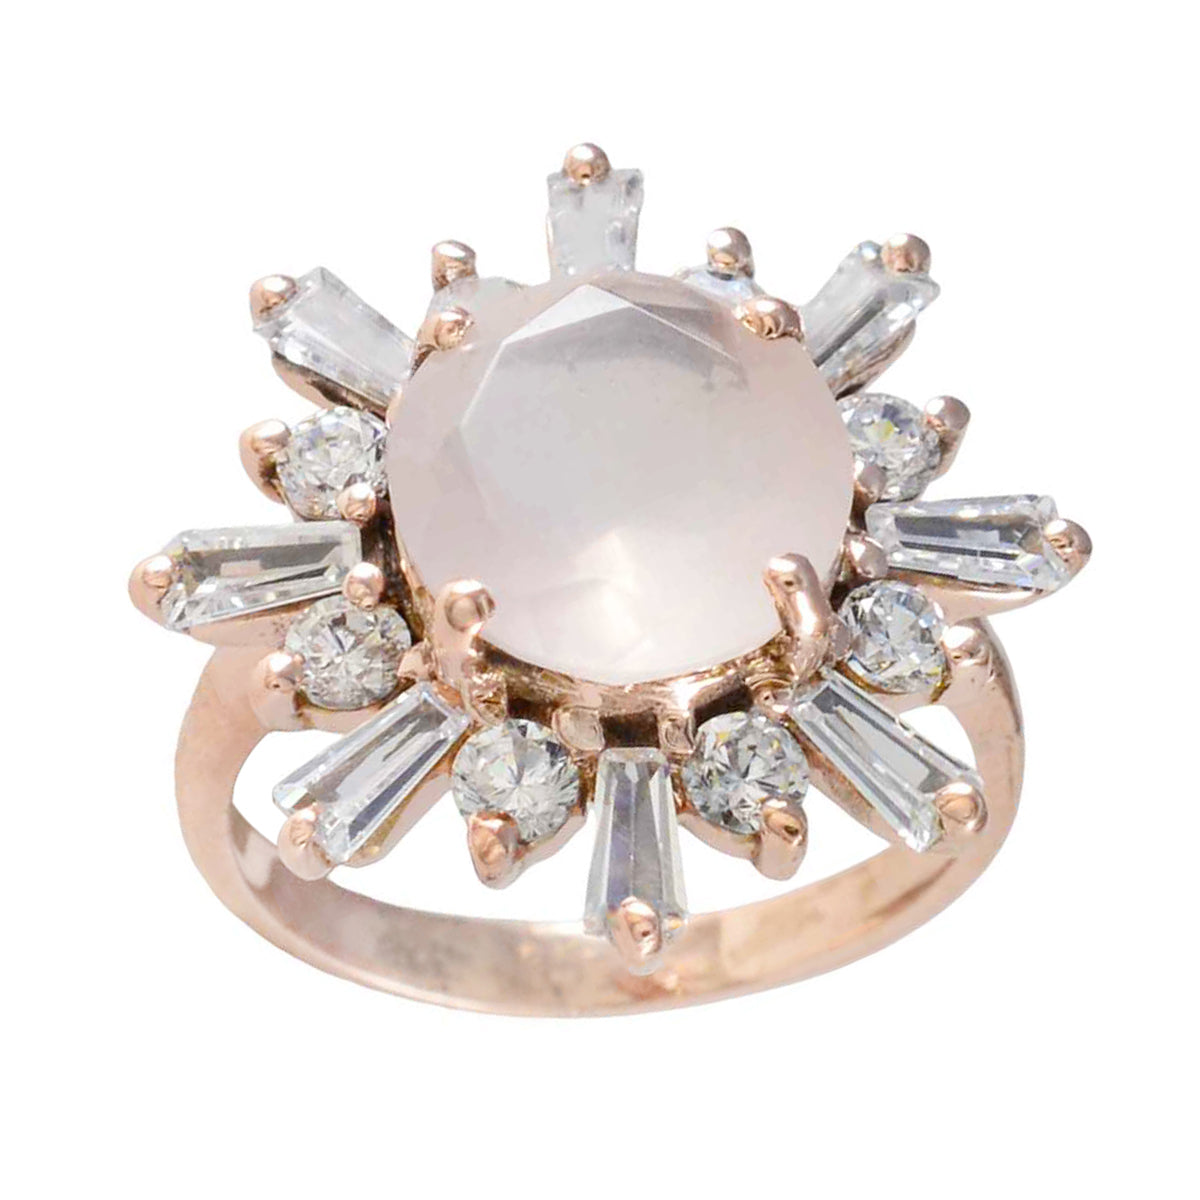 Riyo Rare Silver Ring With Rose Gold Plating White CZ Stone Round Shape Prong Setting Handamde Jewelry Christmas Ring